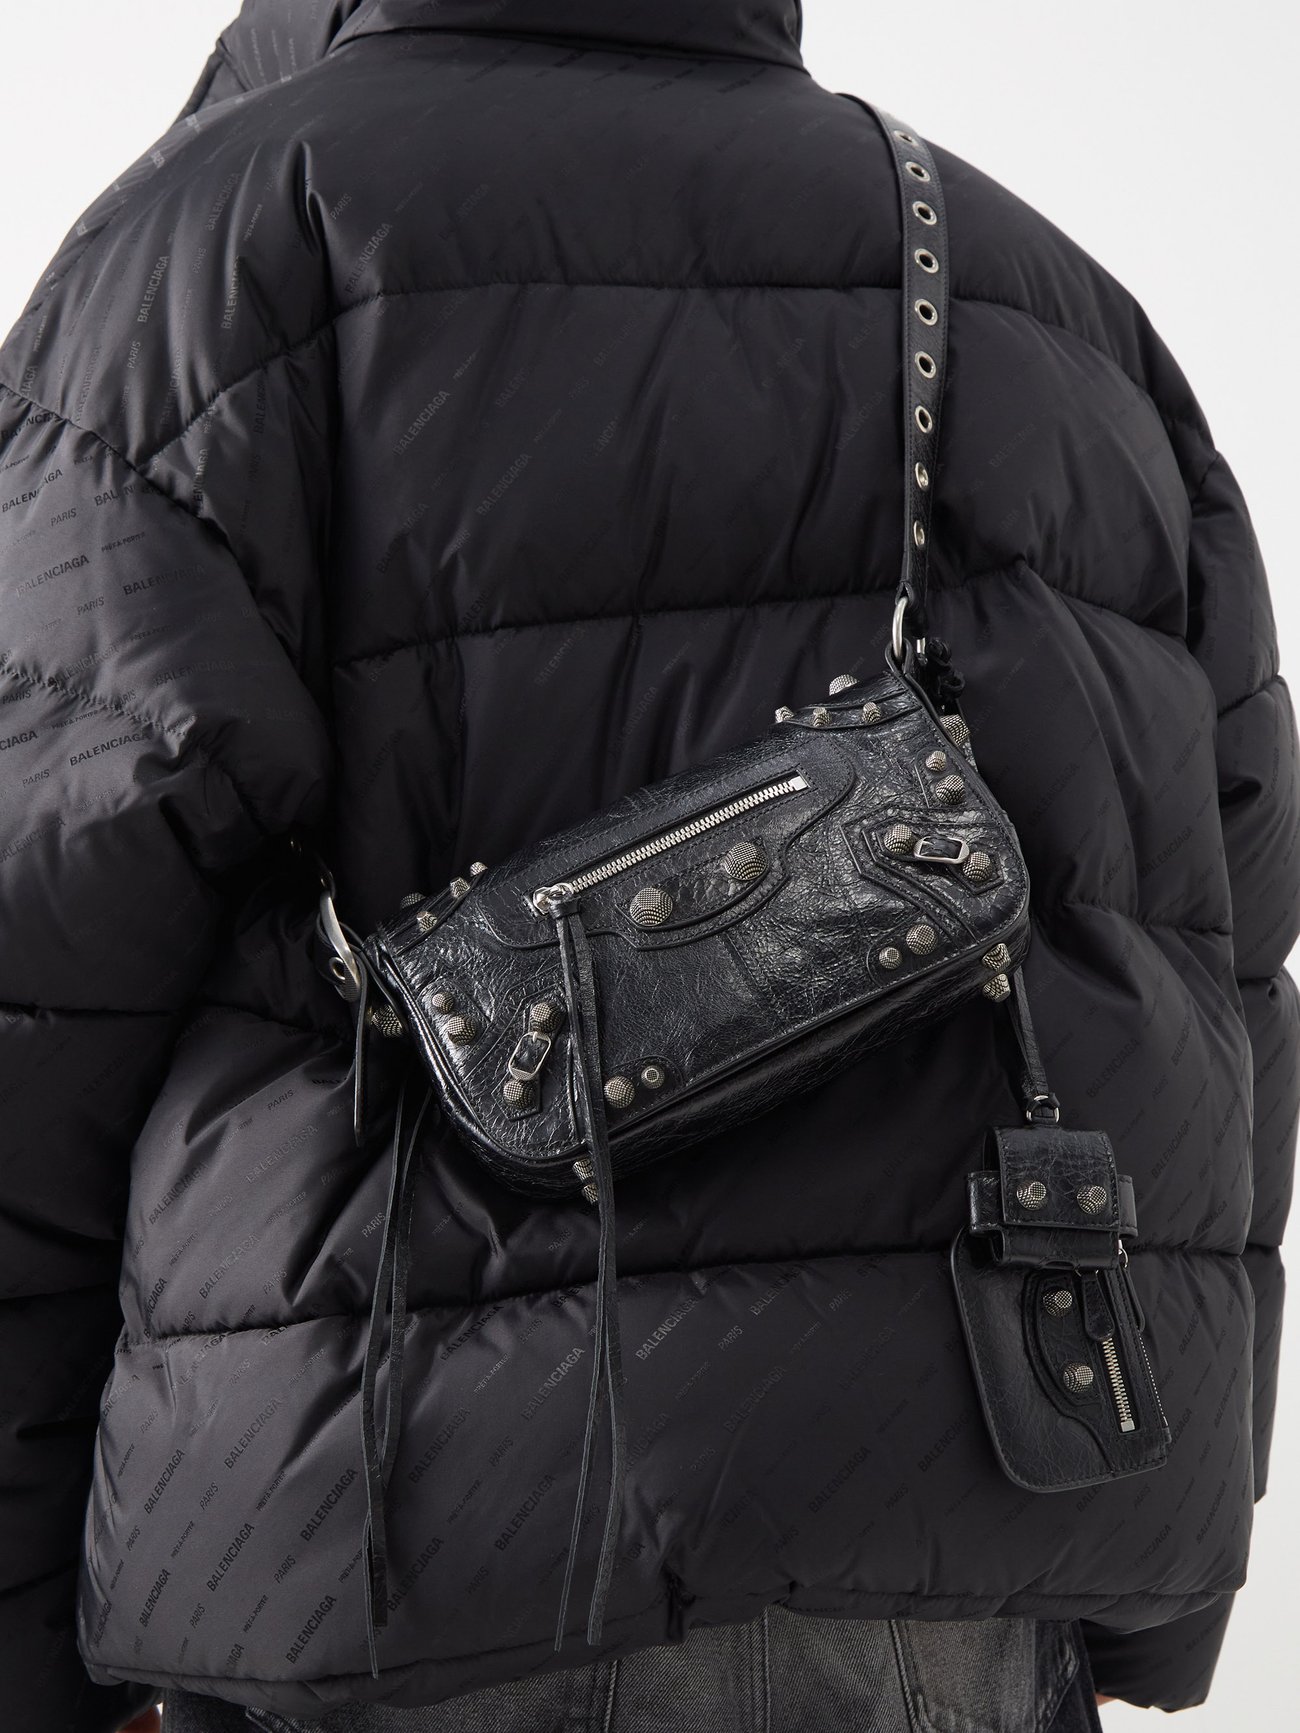 Black Le Cagole crinkled-leather cross-body bag, Balenciaga